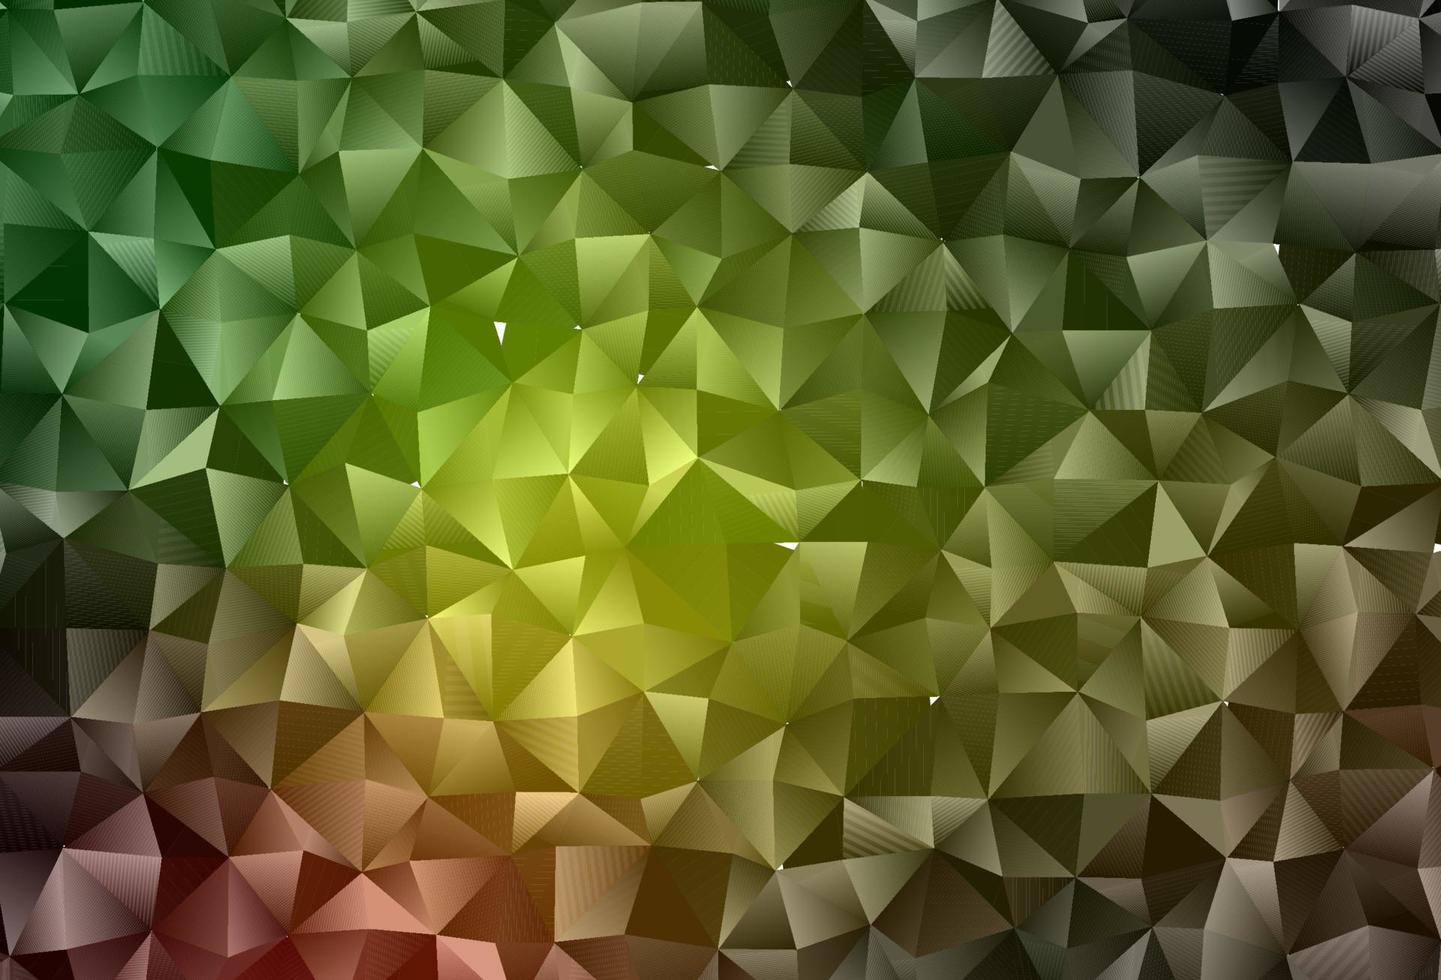 dunkelgrüner, gelber Vektor abstrakter polygonaler Plan.